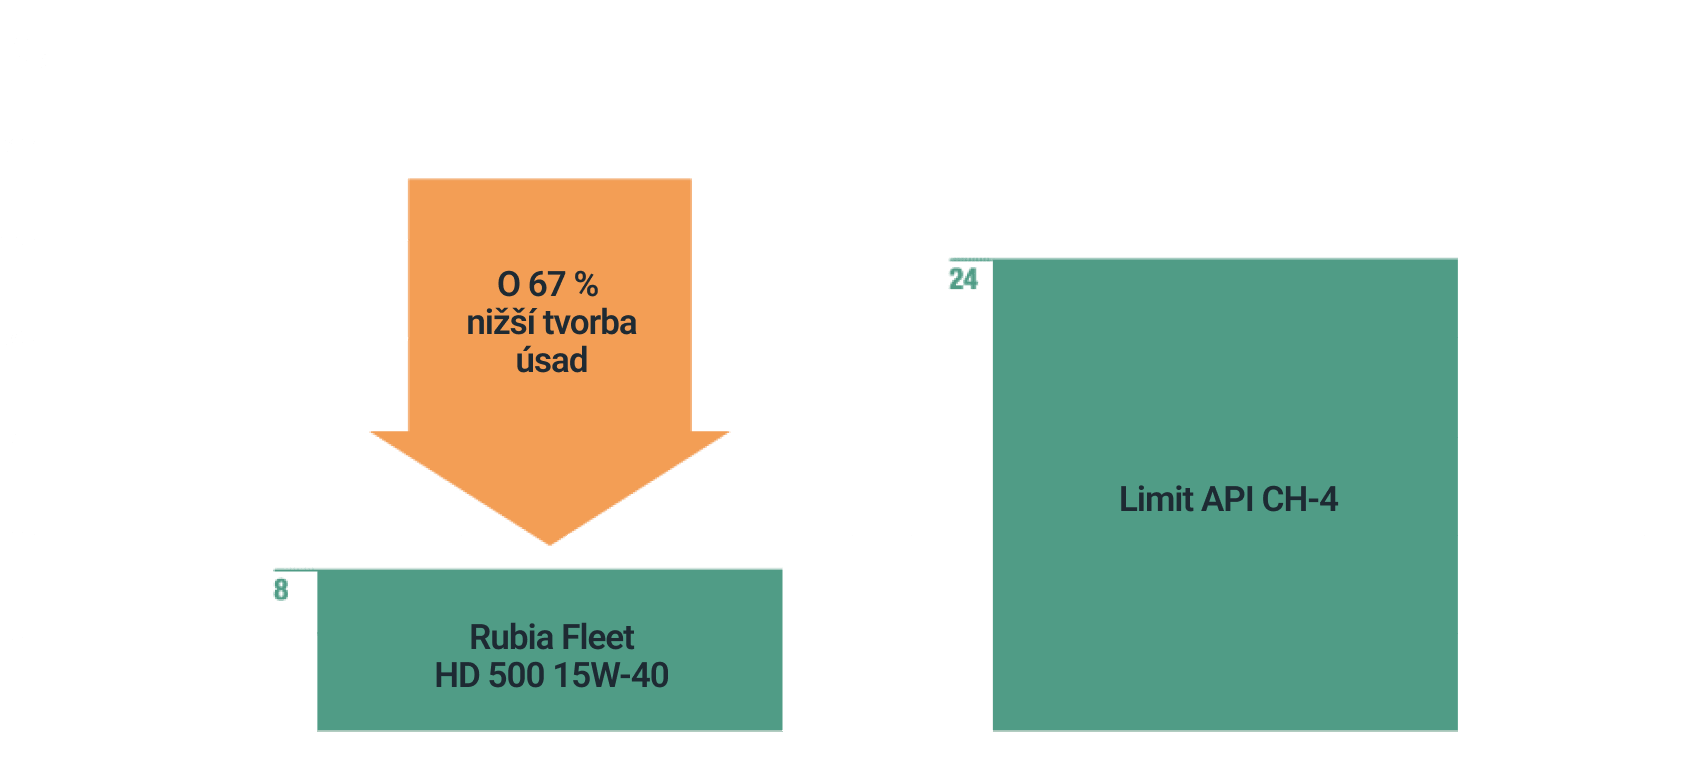 Graf vyšší účinnosti oleje Rubia Fleet